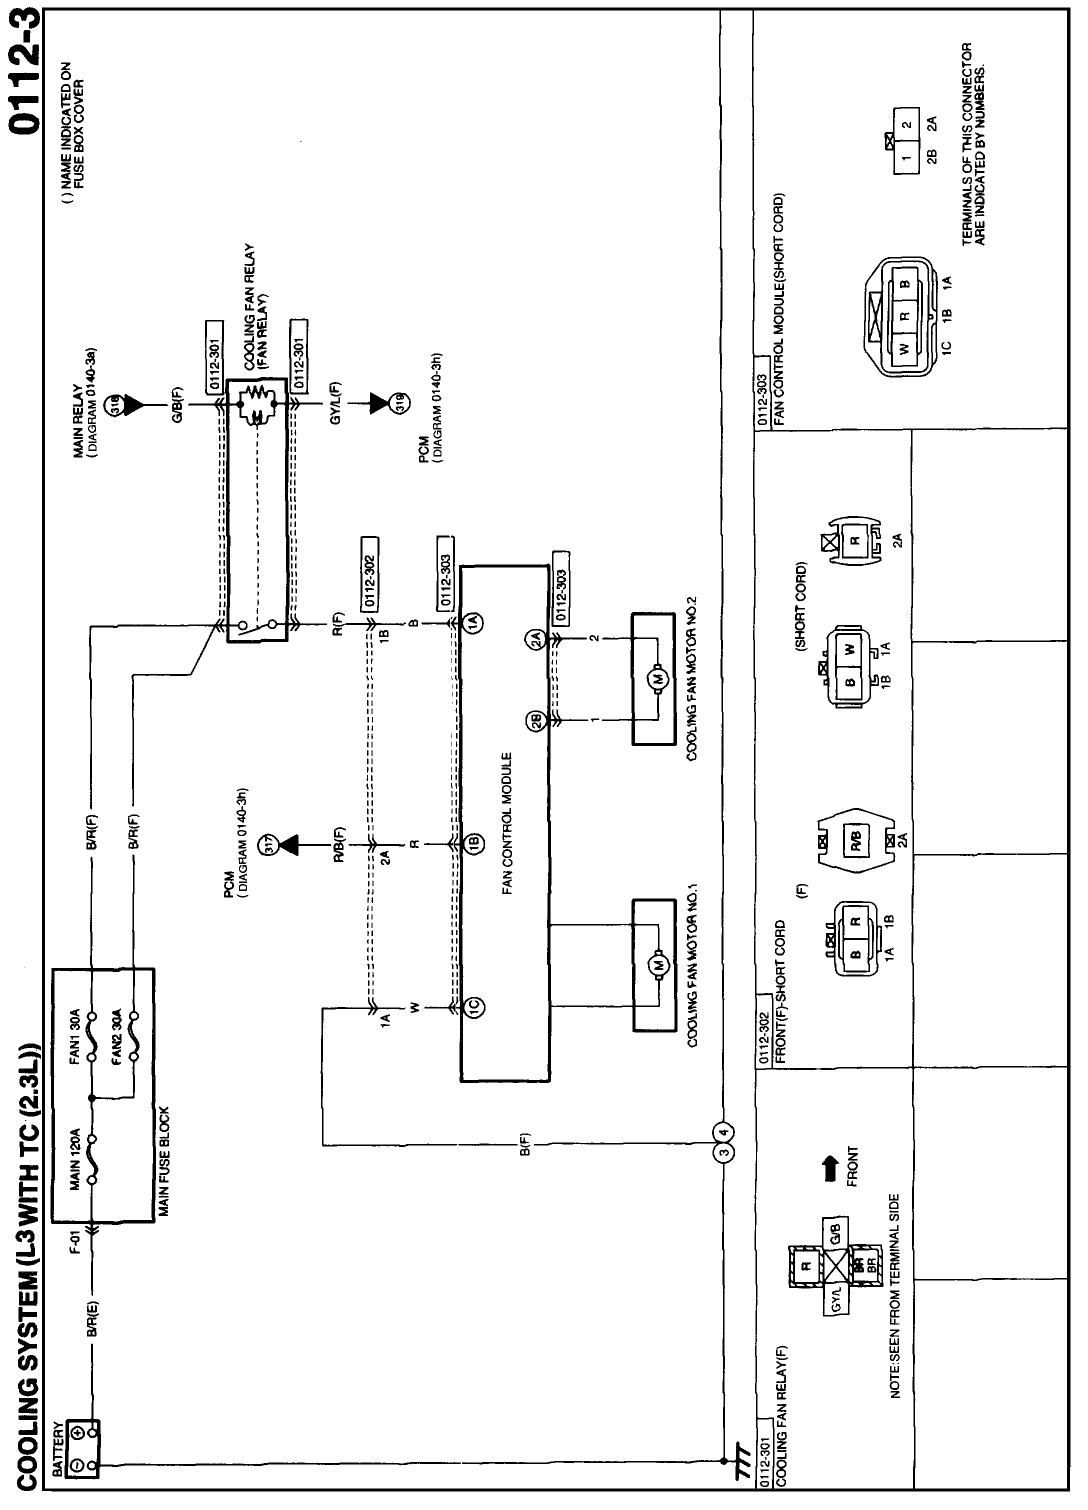 [DIAGRAM] Mazda 6 2005 Wiring Diagram FULL Version HD Quality Wiring